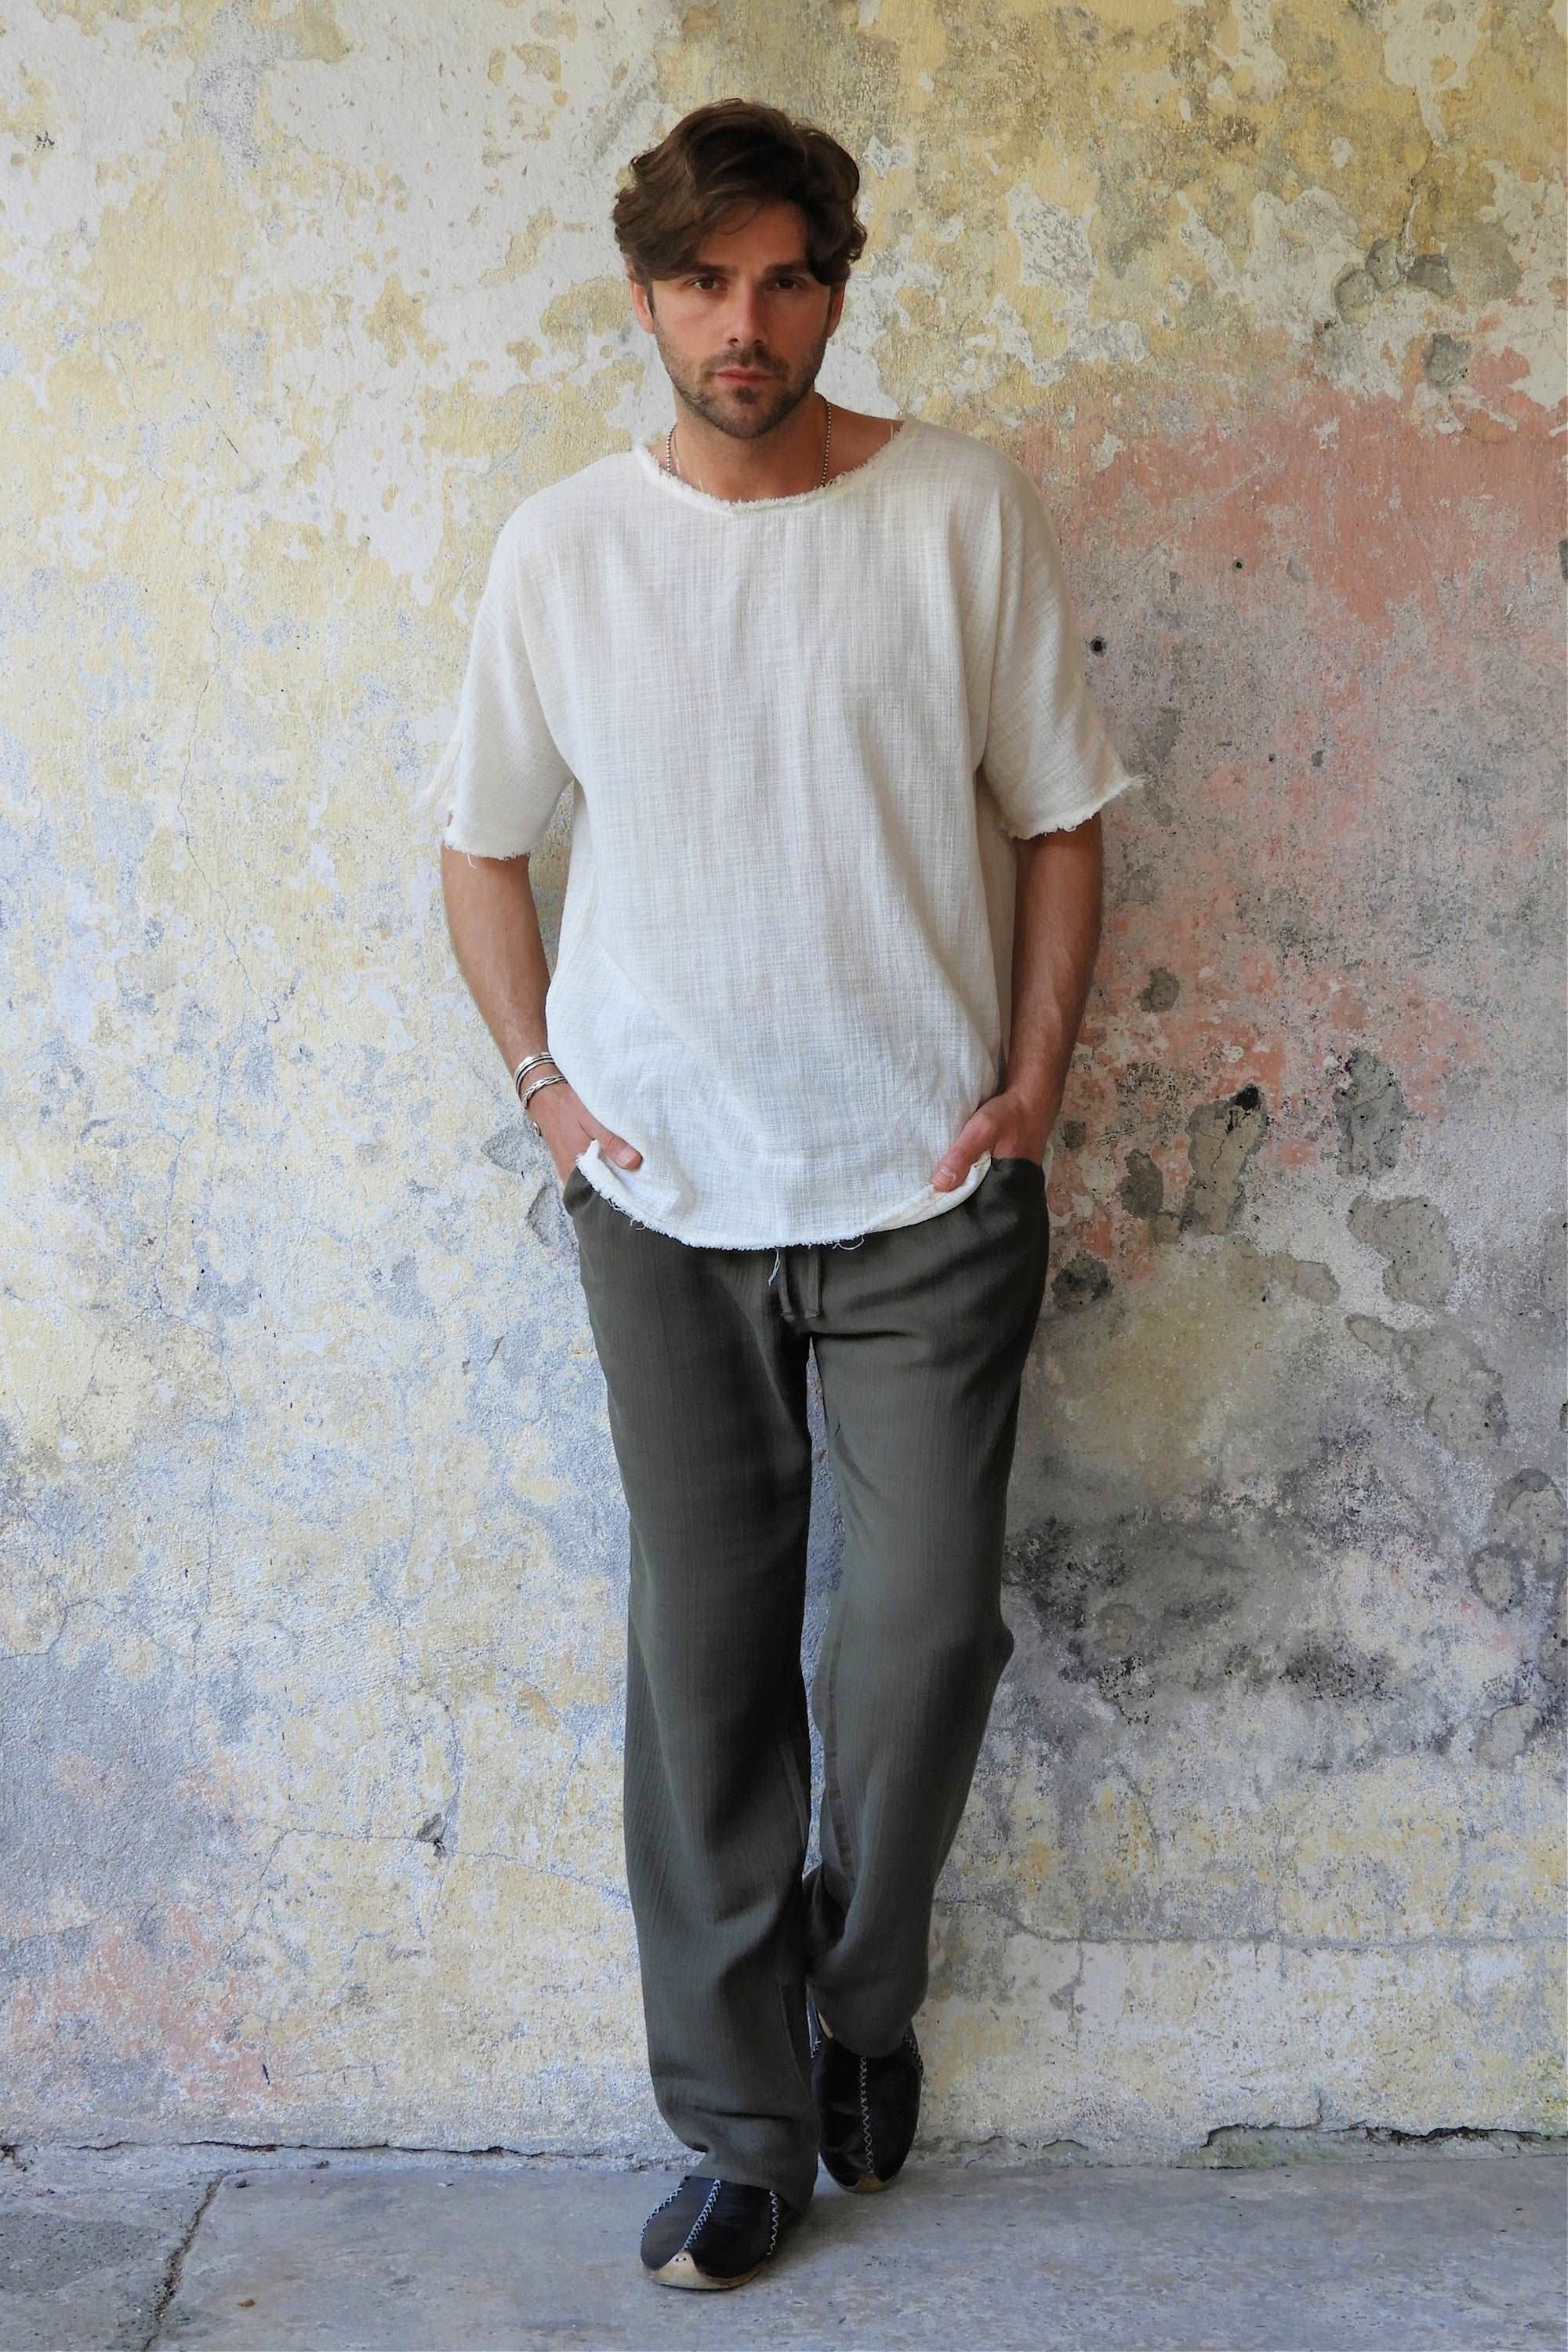 Sustainable  | DUNE Men's Gauze Cotton Pants (Army Green, Dusty Mint) by Odana's